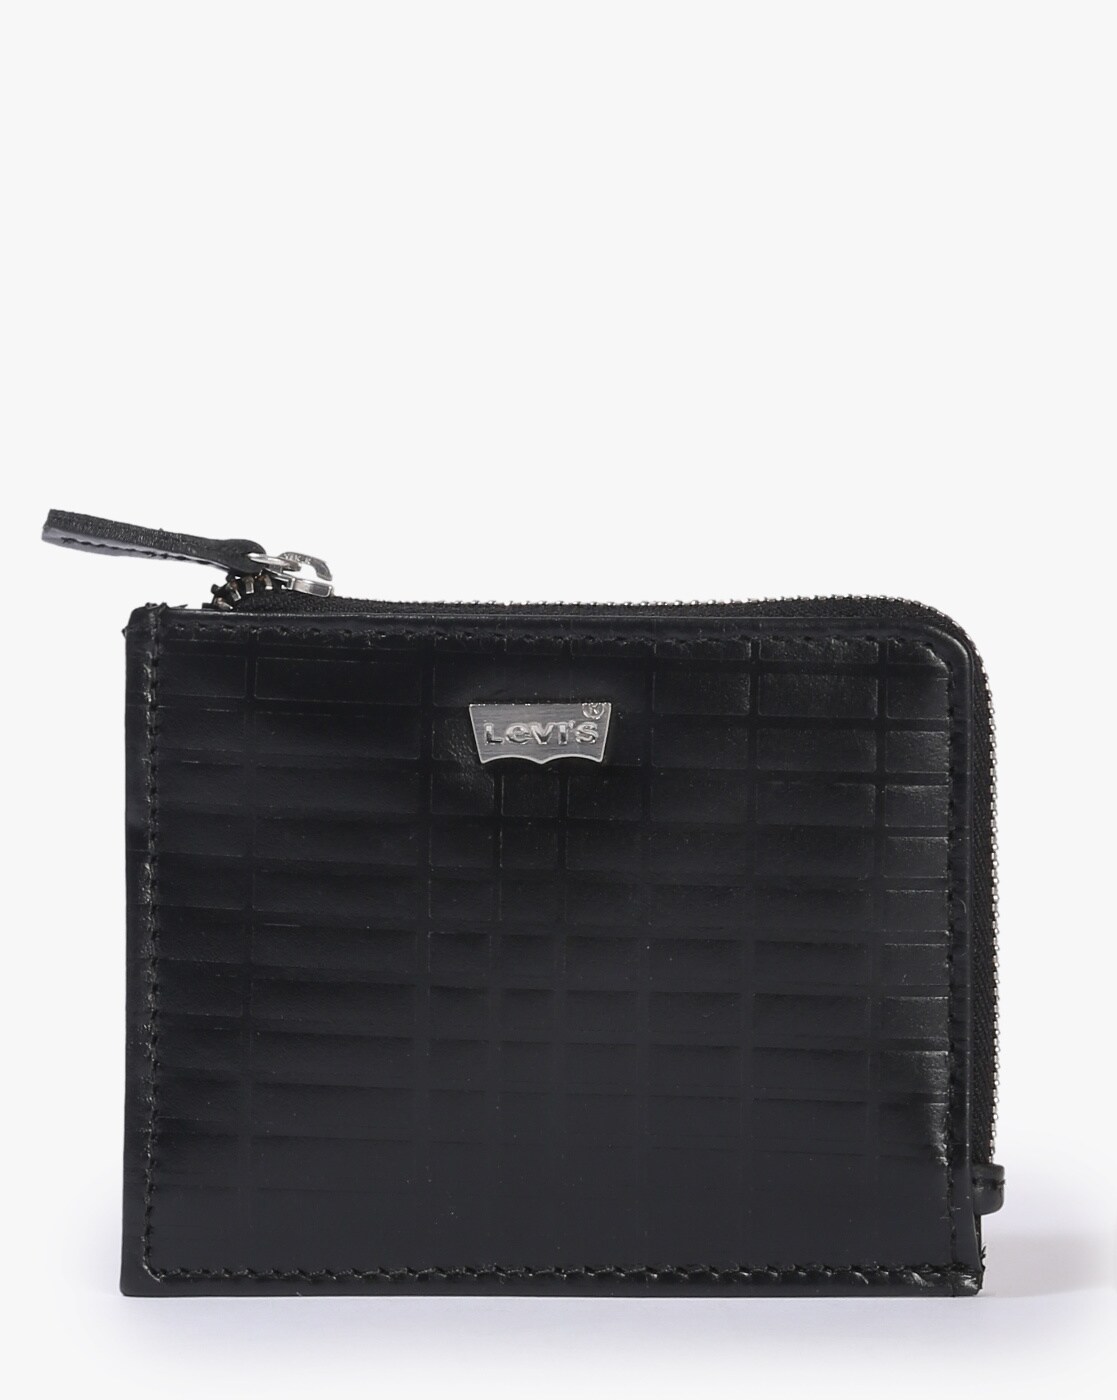 Leather Wallets for Men: Vegetable Tan Slim Card Wallet | KMM & Co.